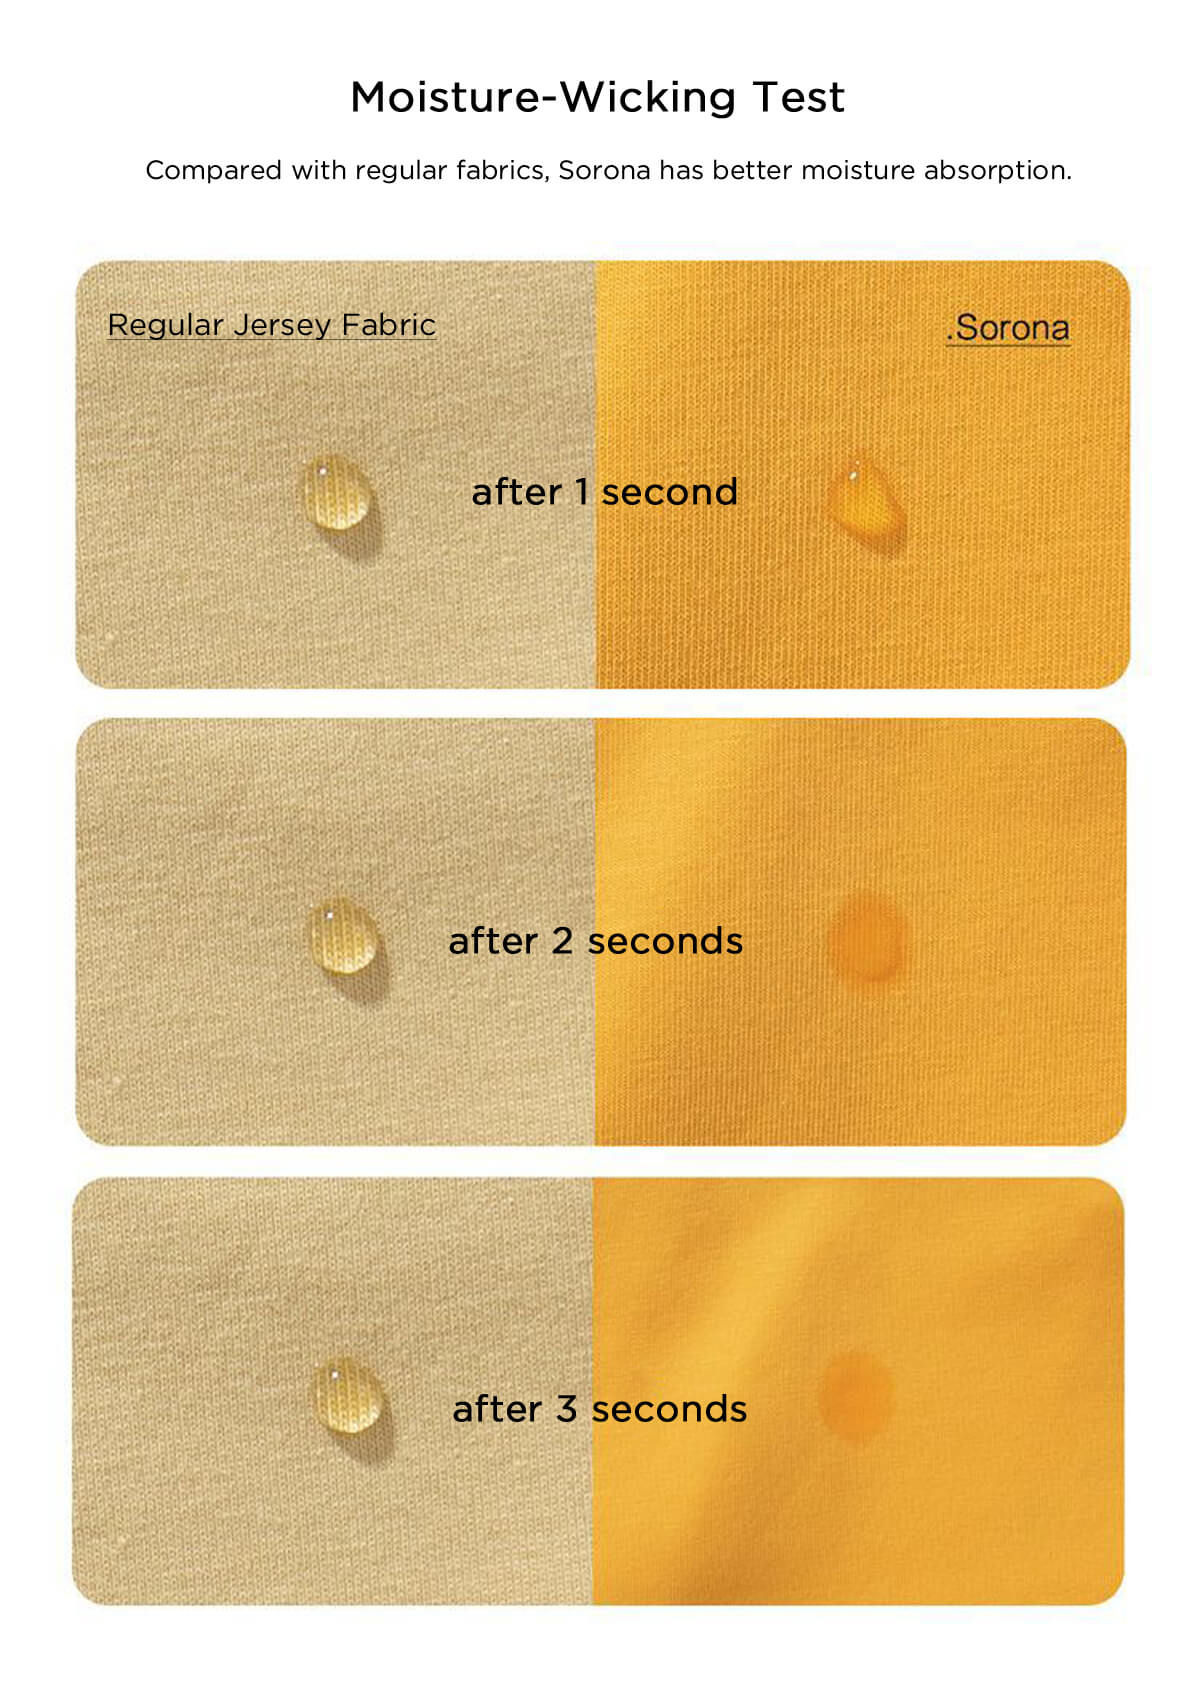 moisture wicking test sorona vs regular fabric